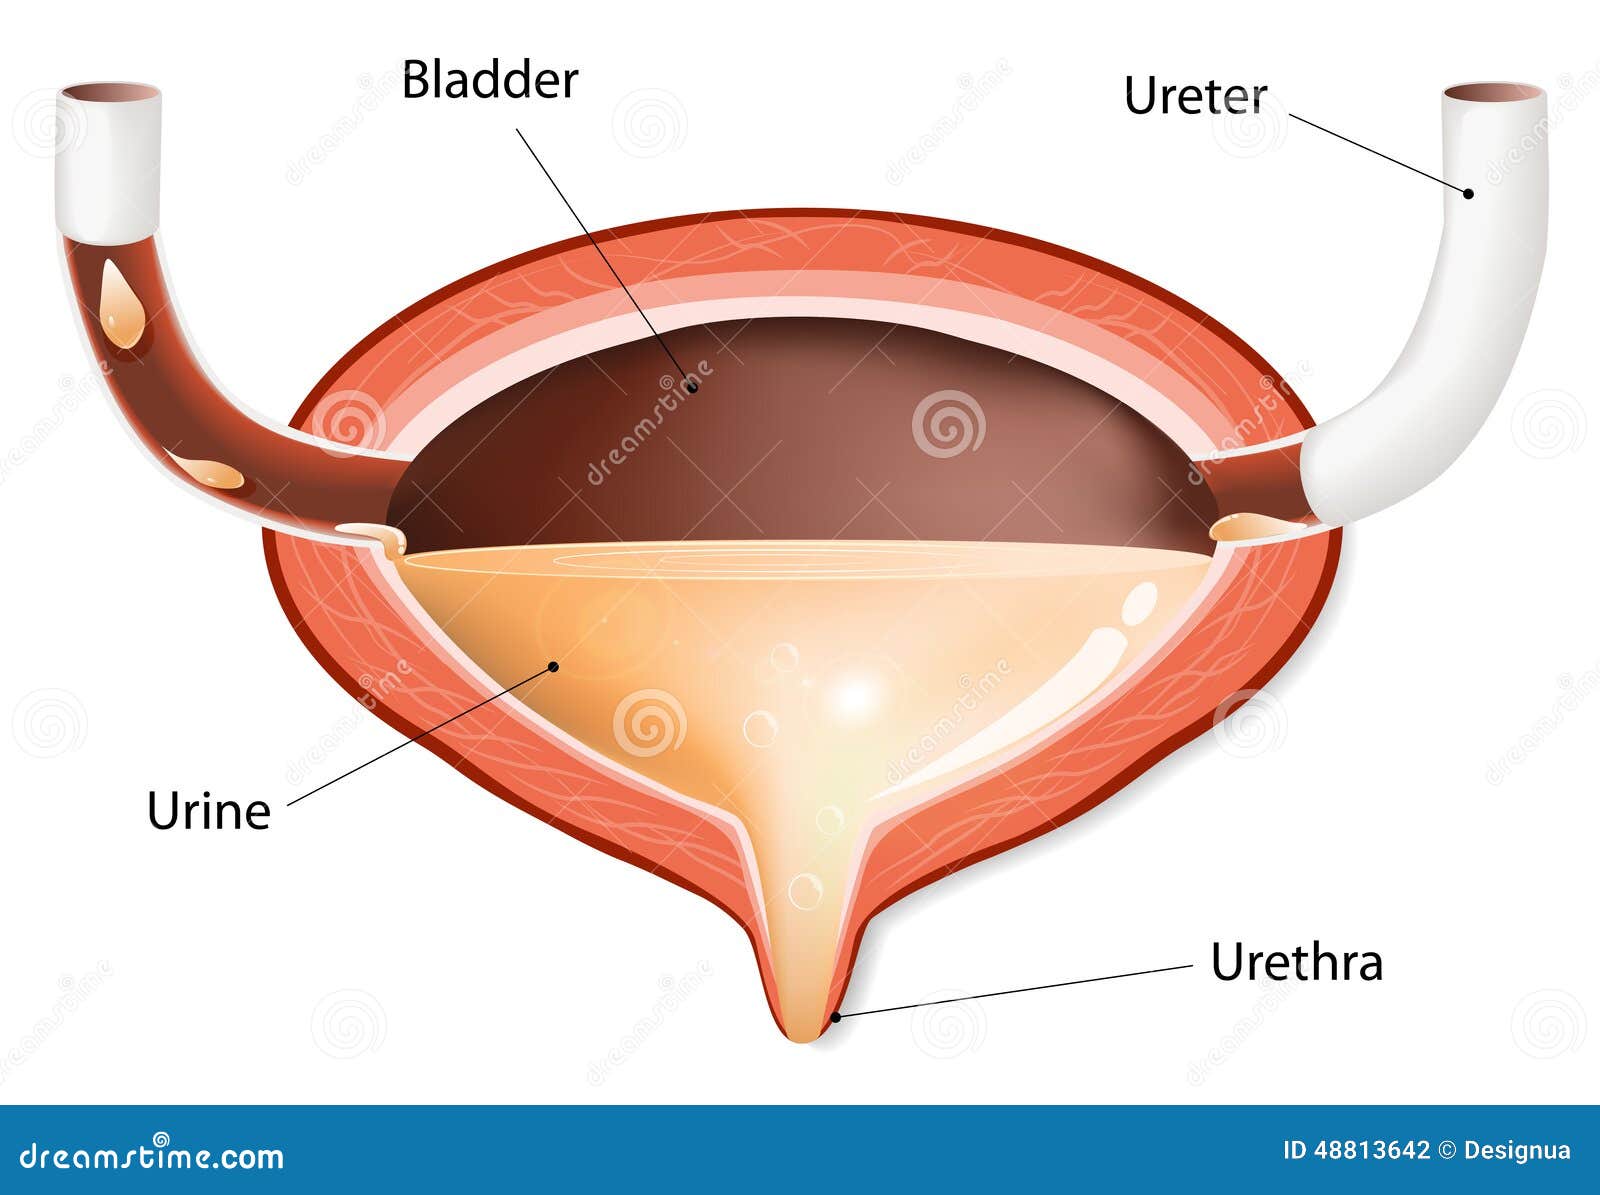 urinary bladder with urine